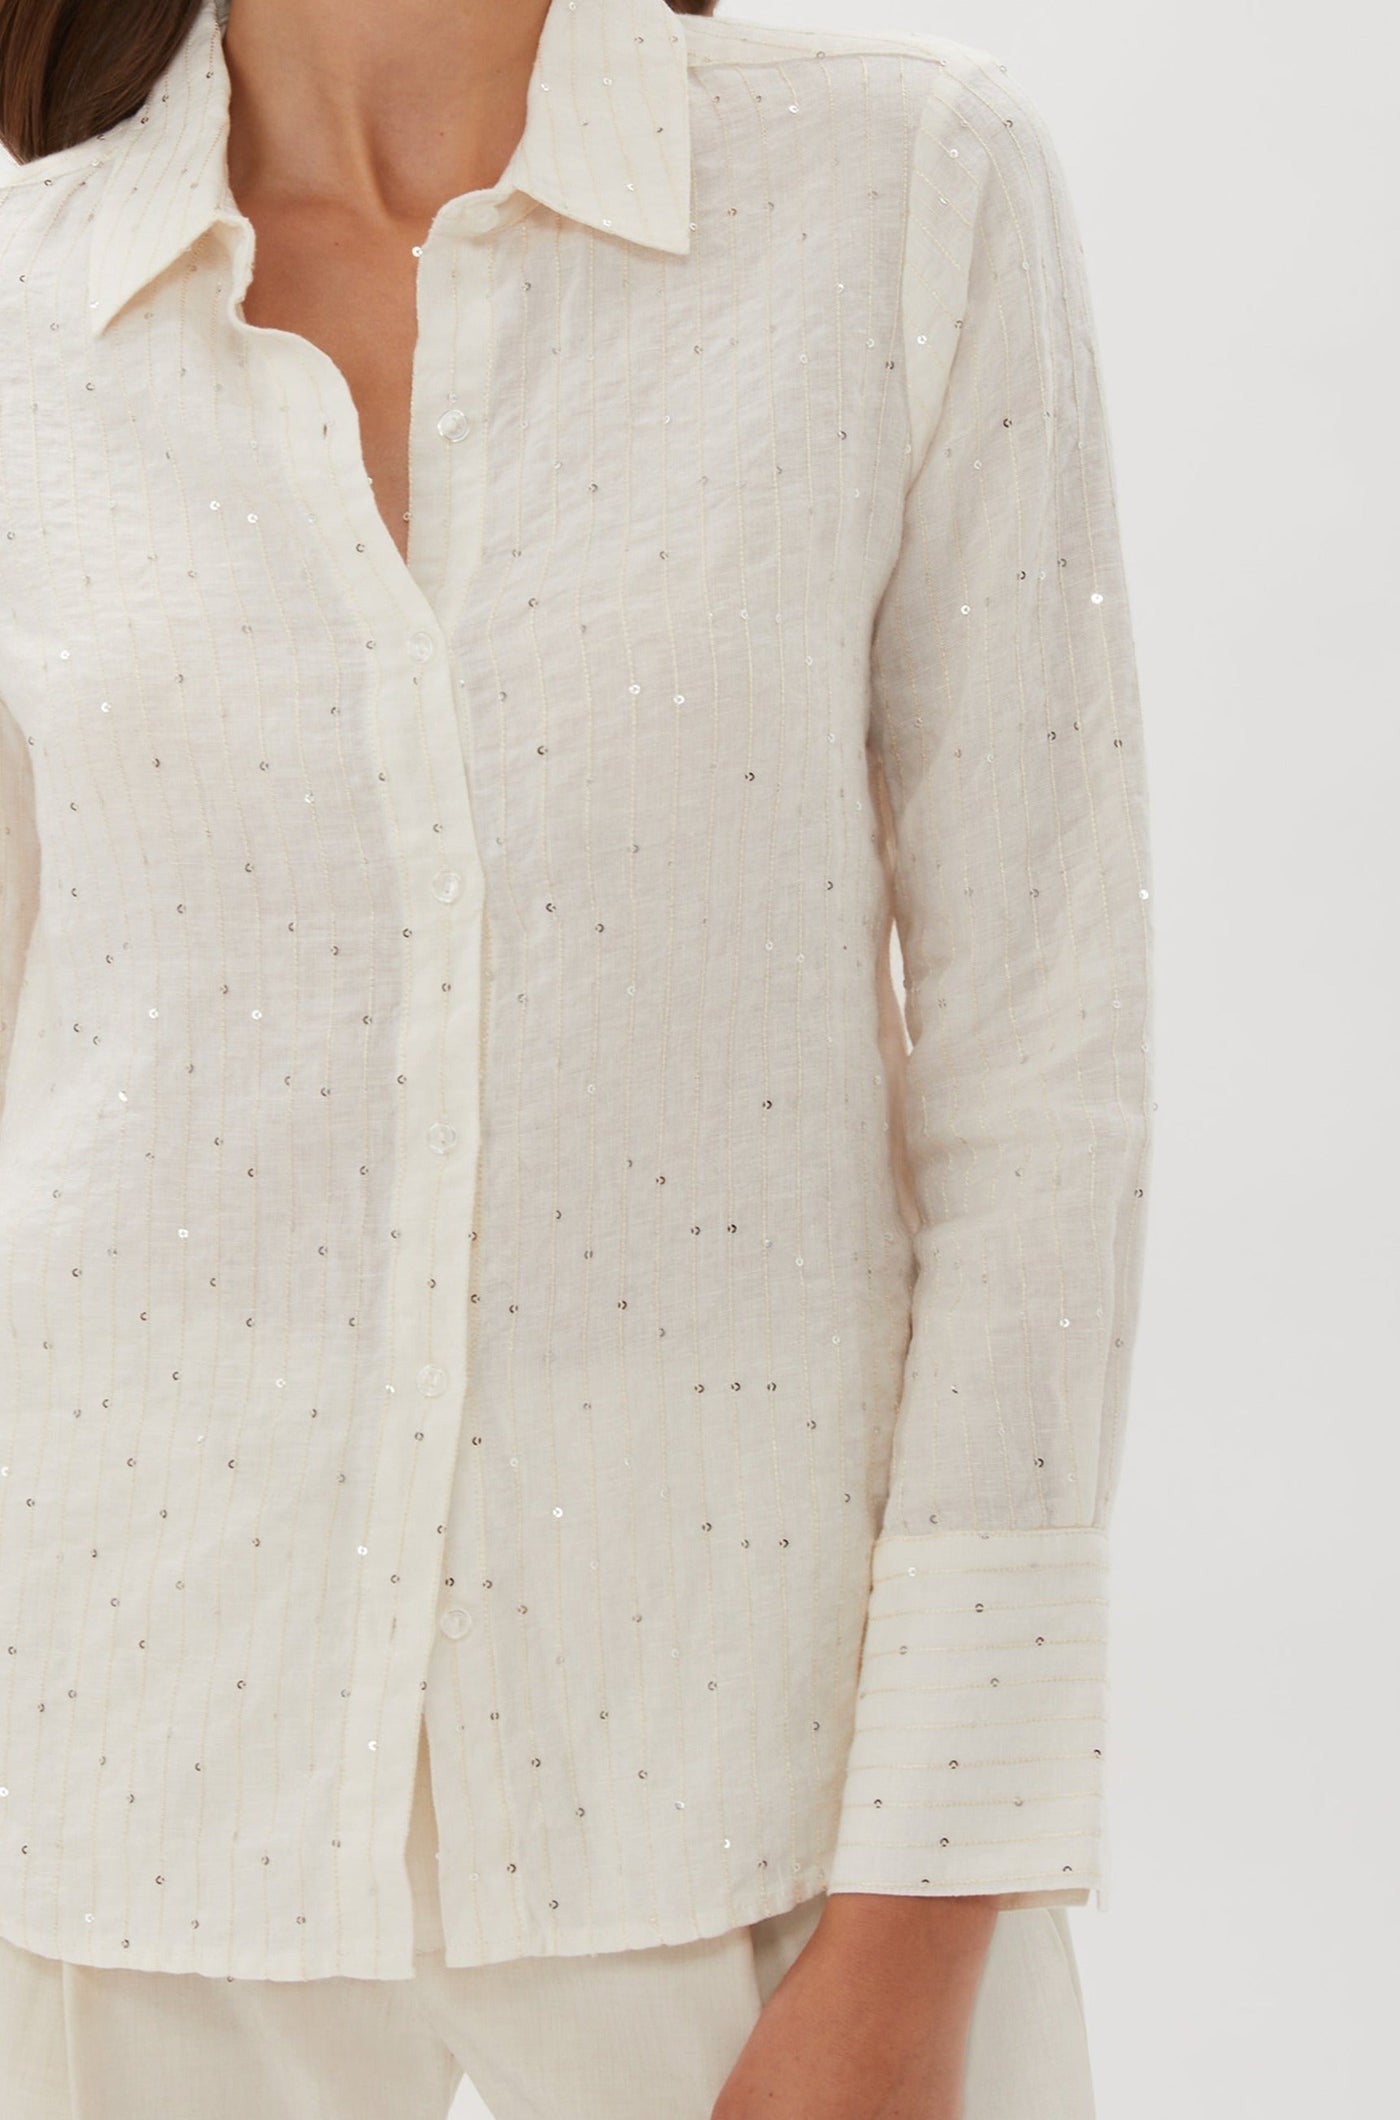 Pfeiffer Clean Shirt - White Sequin